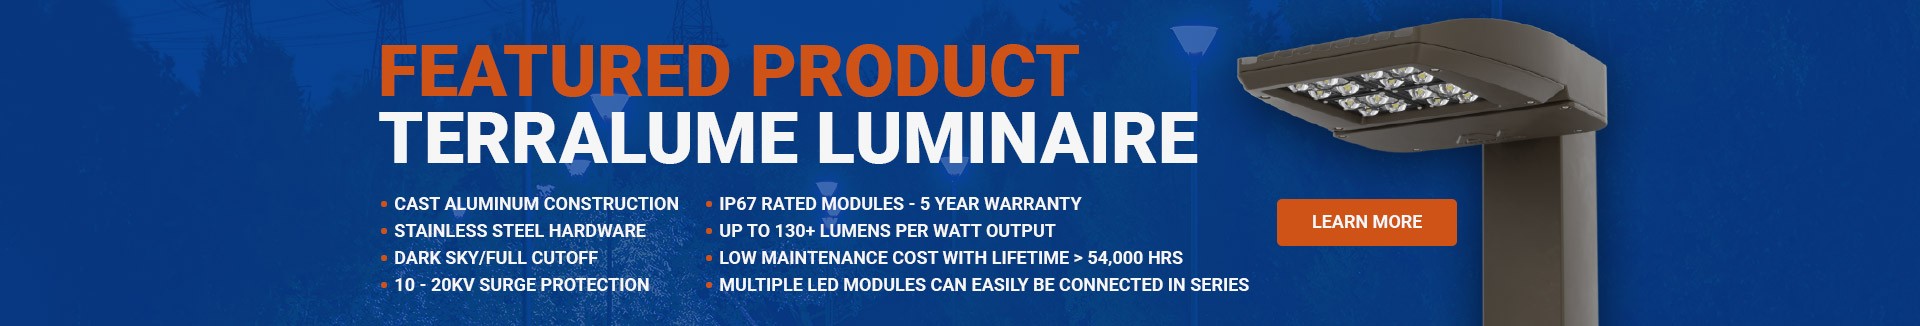 Featured Product - Terralume Luminaire